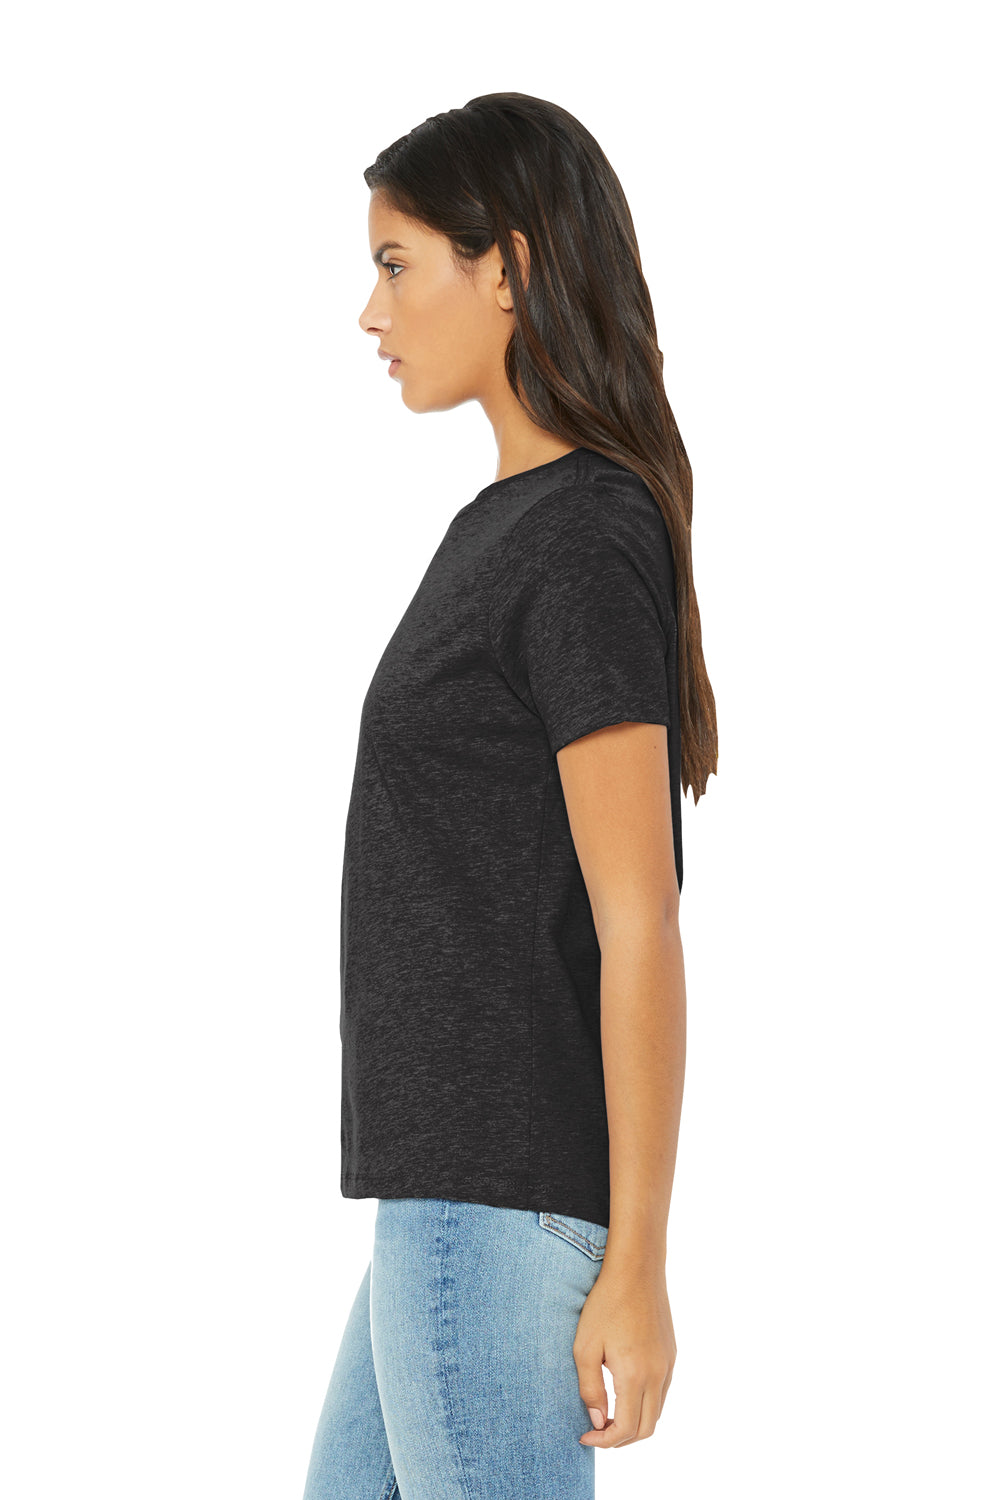 Bella + Canvas BC6413 Womens Short Sleeve Crewneck T-Shirt Charcoal Black Model Side